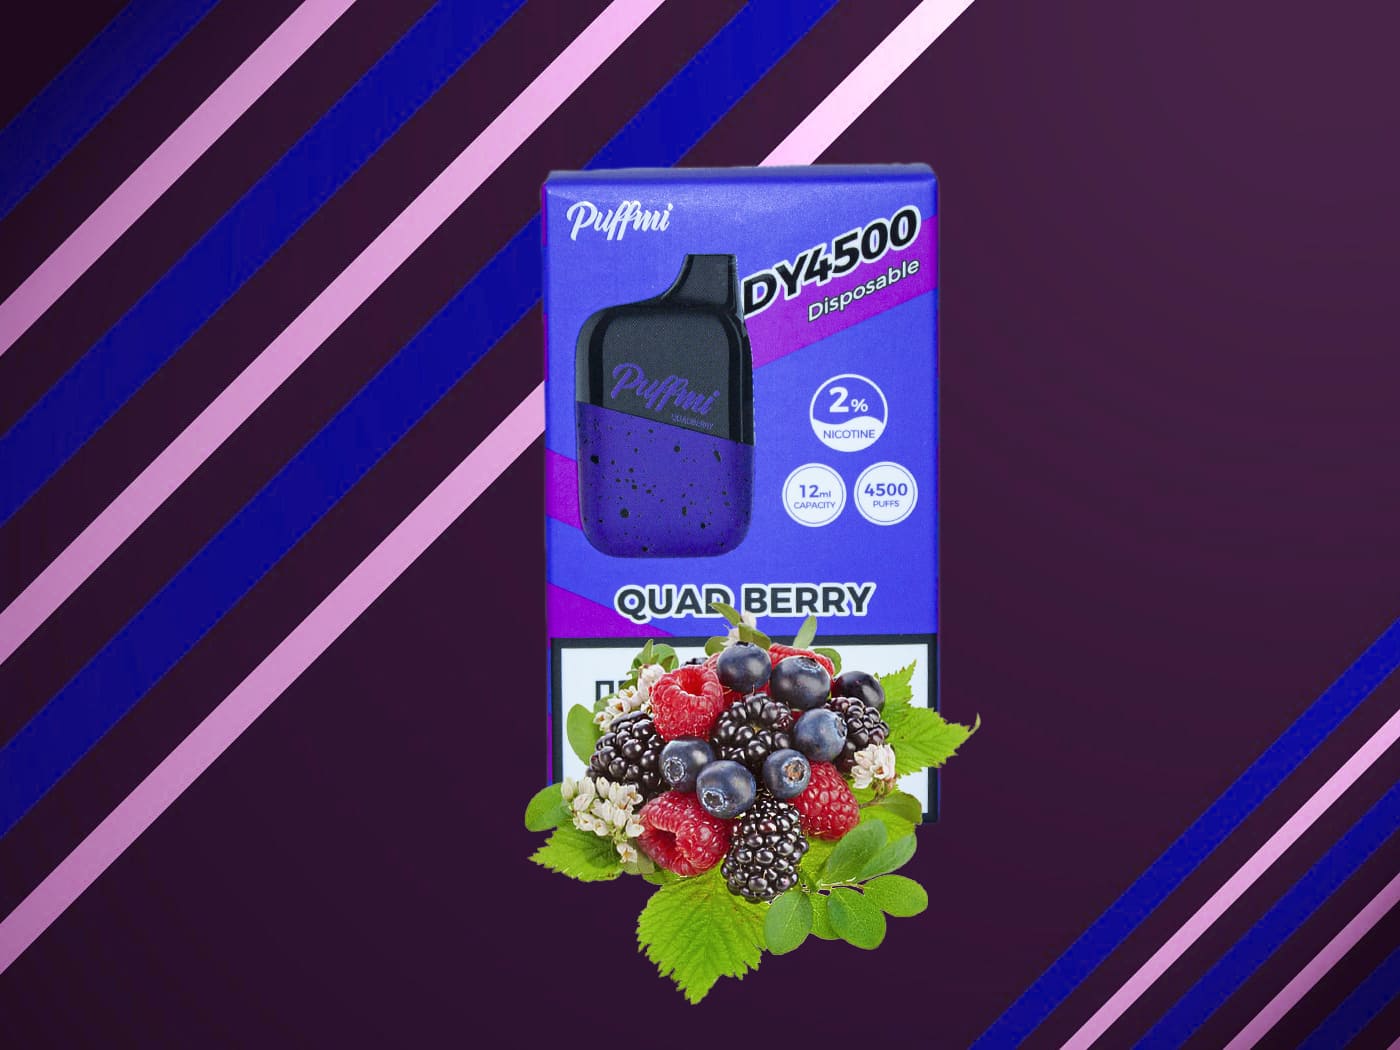 Купить электронную puffmi. PUFFMI Quad Berry 4500. PUFFMI dy 4500 (Blue Razz - черника малина). PUFFMI 4500 вкусы Quad Berry. Quad Berry PUFFMI вкус.